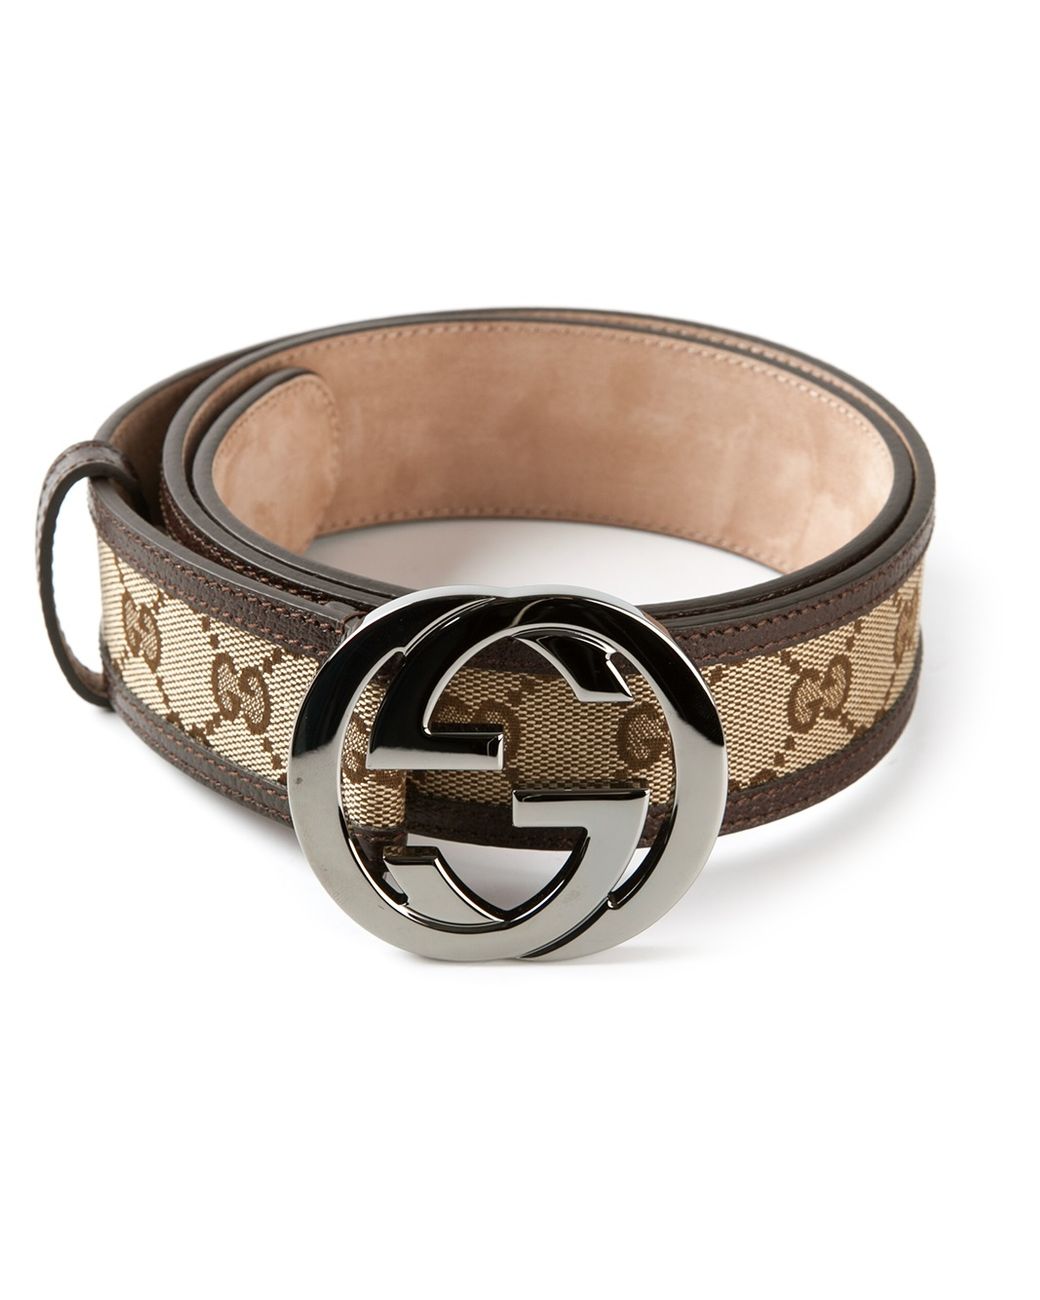 Gucci, Accessories, Sold Gucci Gg Monogrammed Belt